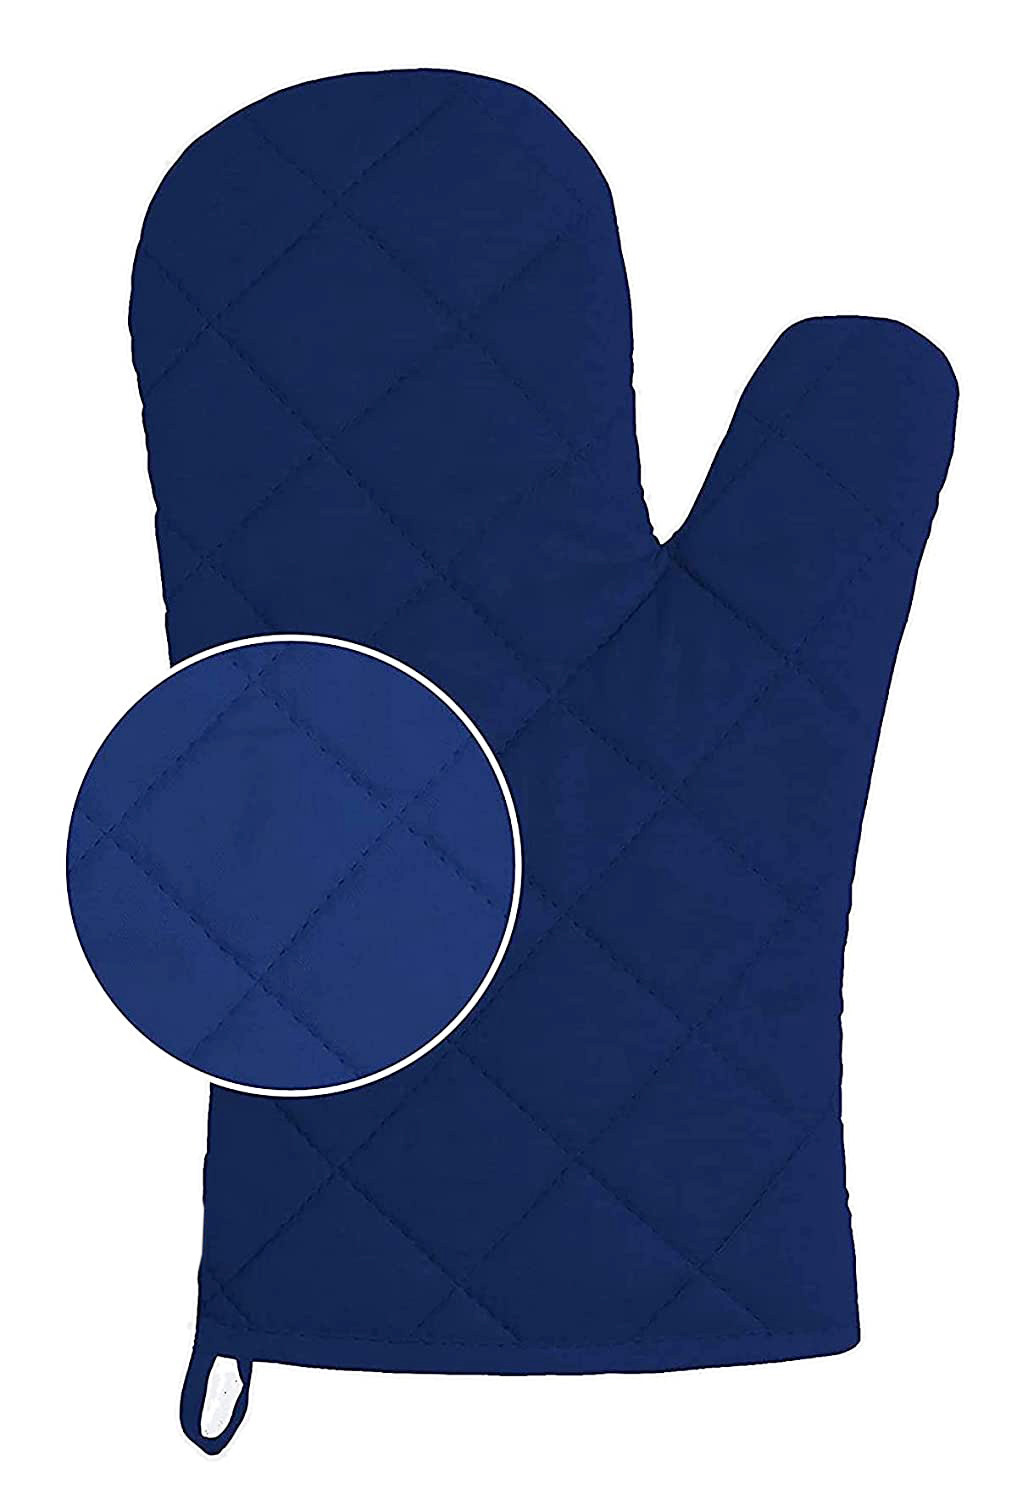 Kuber Industries Cotton Microwave Oven Gloves,(Blue)-HS43KUBMART26081